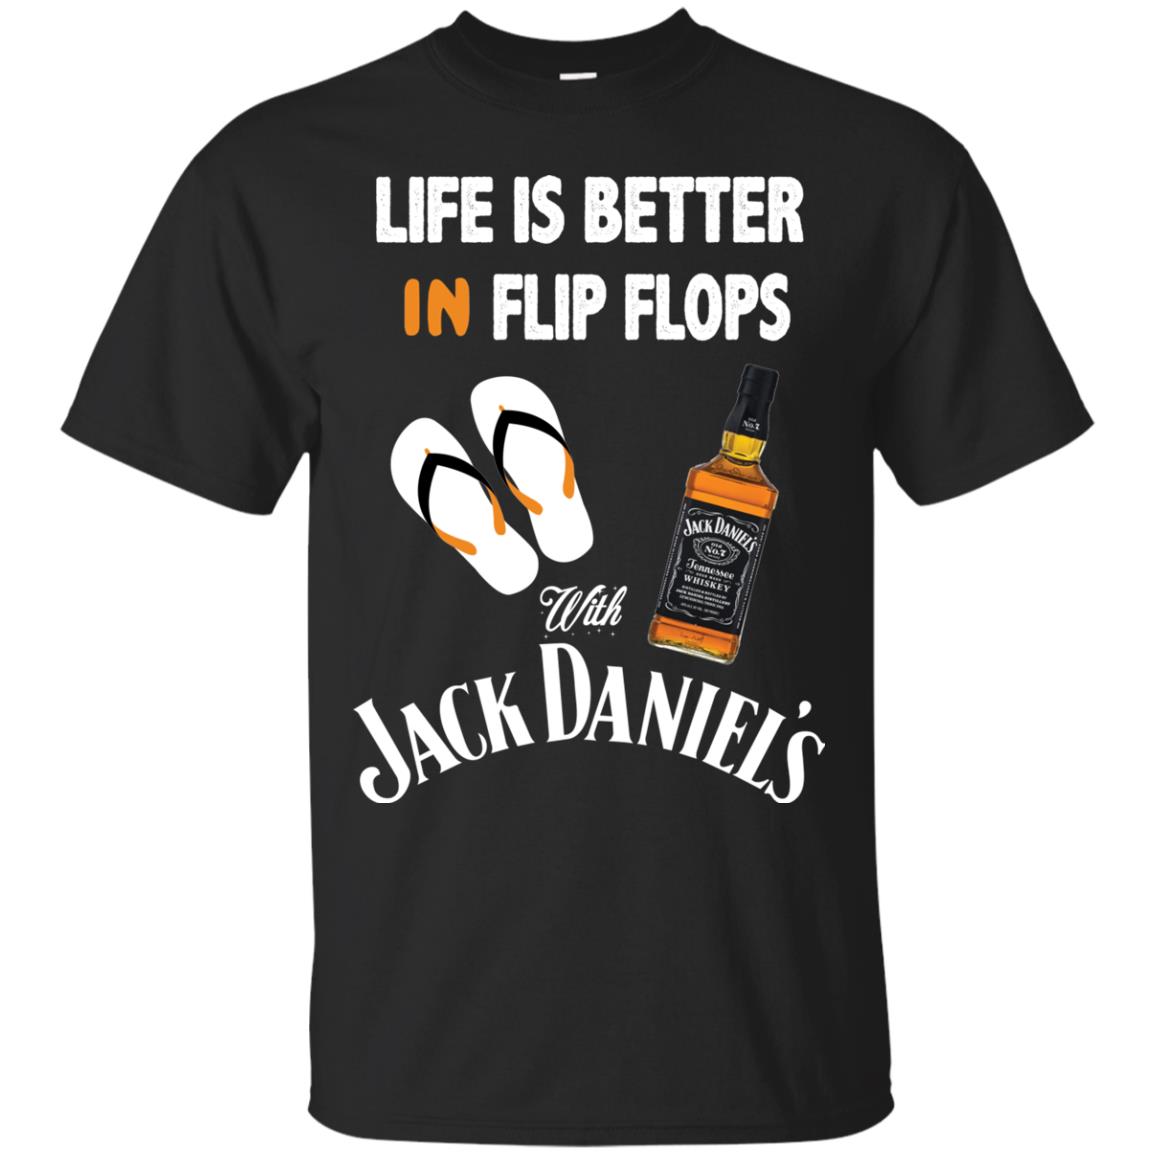 Life Is Better In Flip Flops With Jack Daniel's shirt